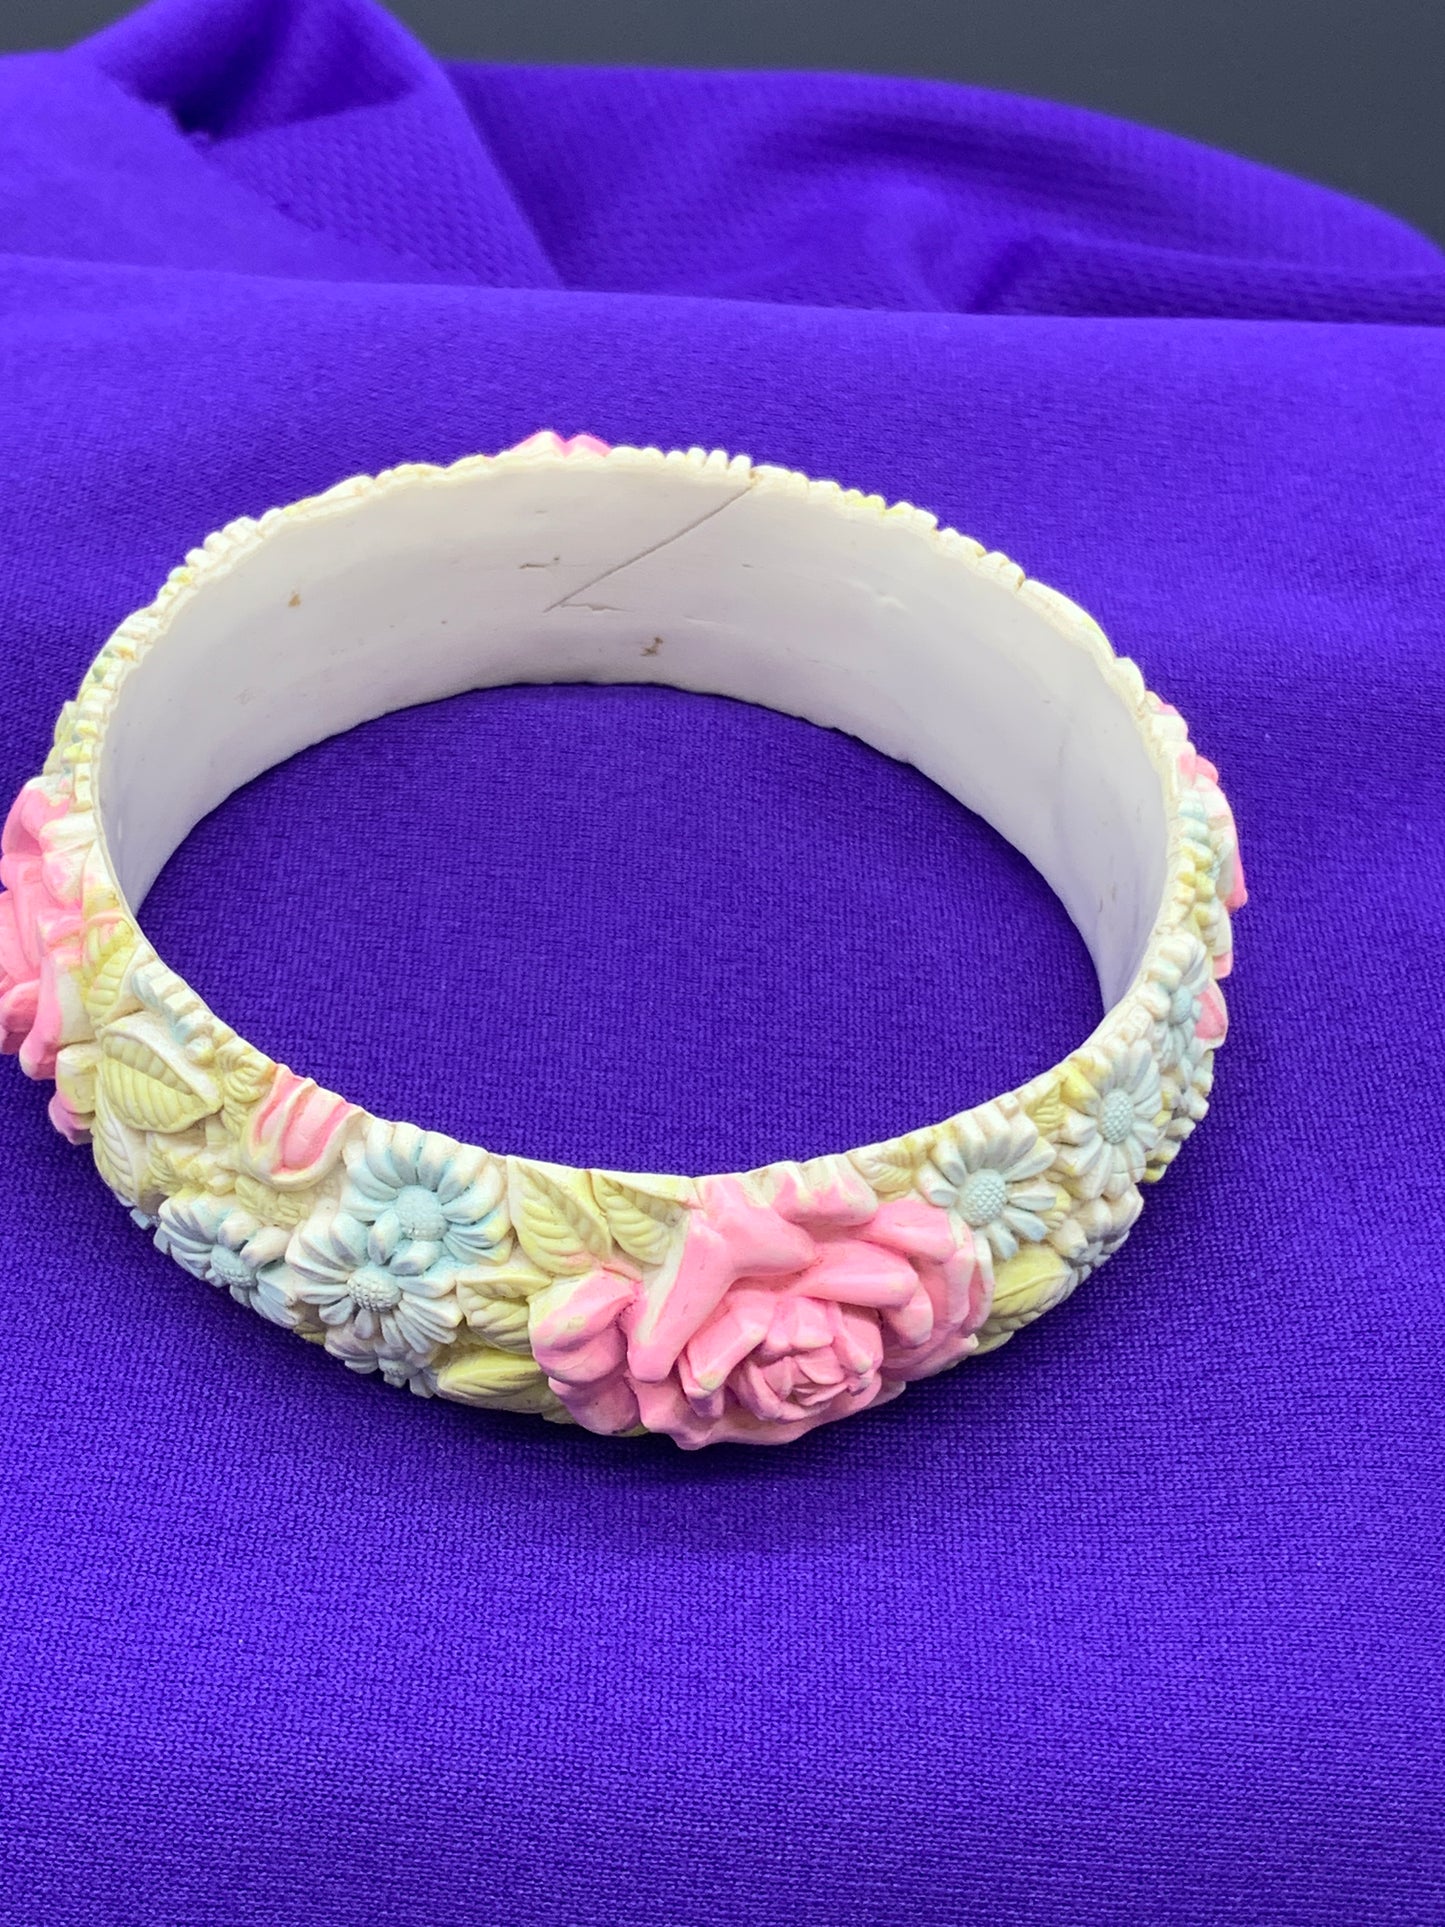 Floral Celluloid Bangle Bracelet